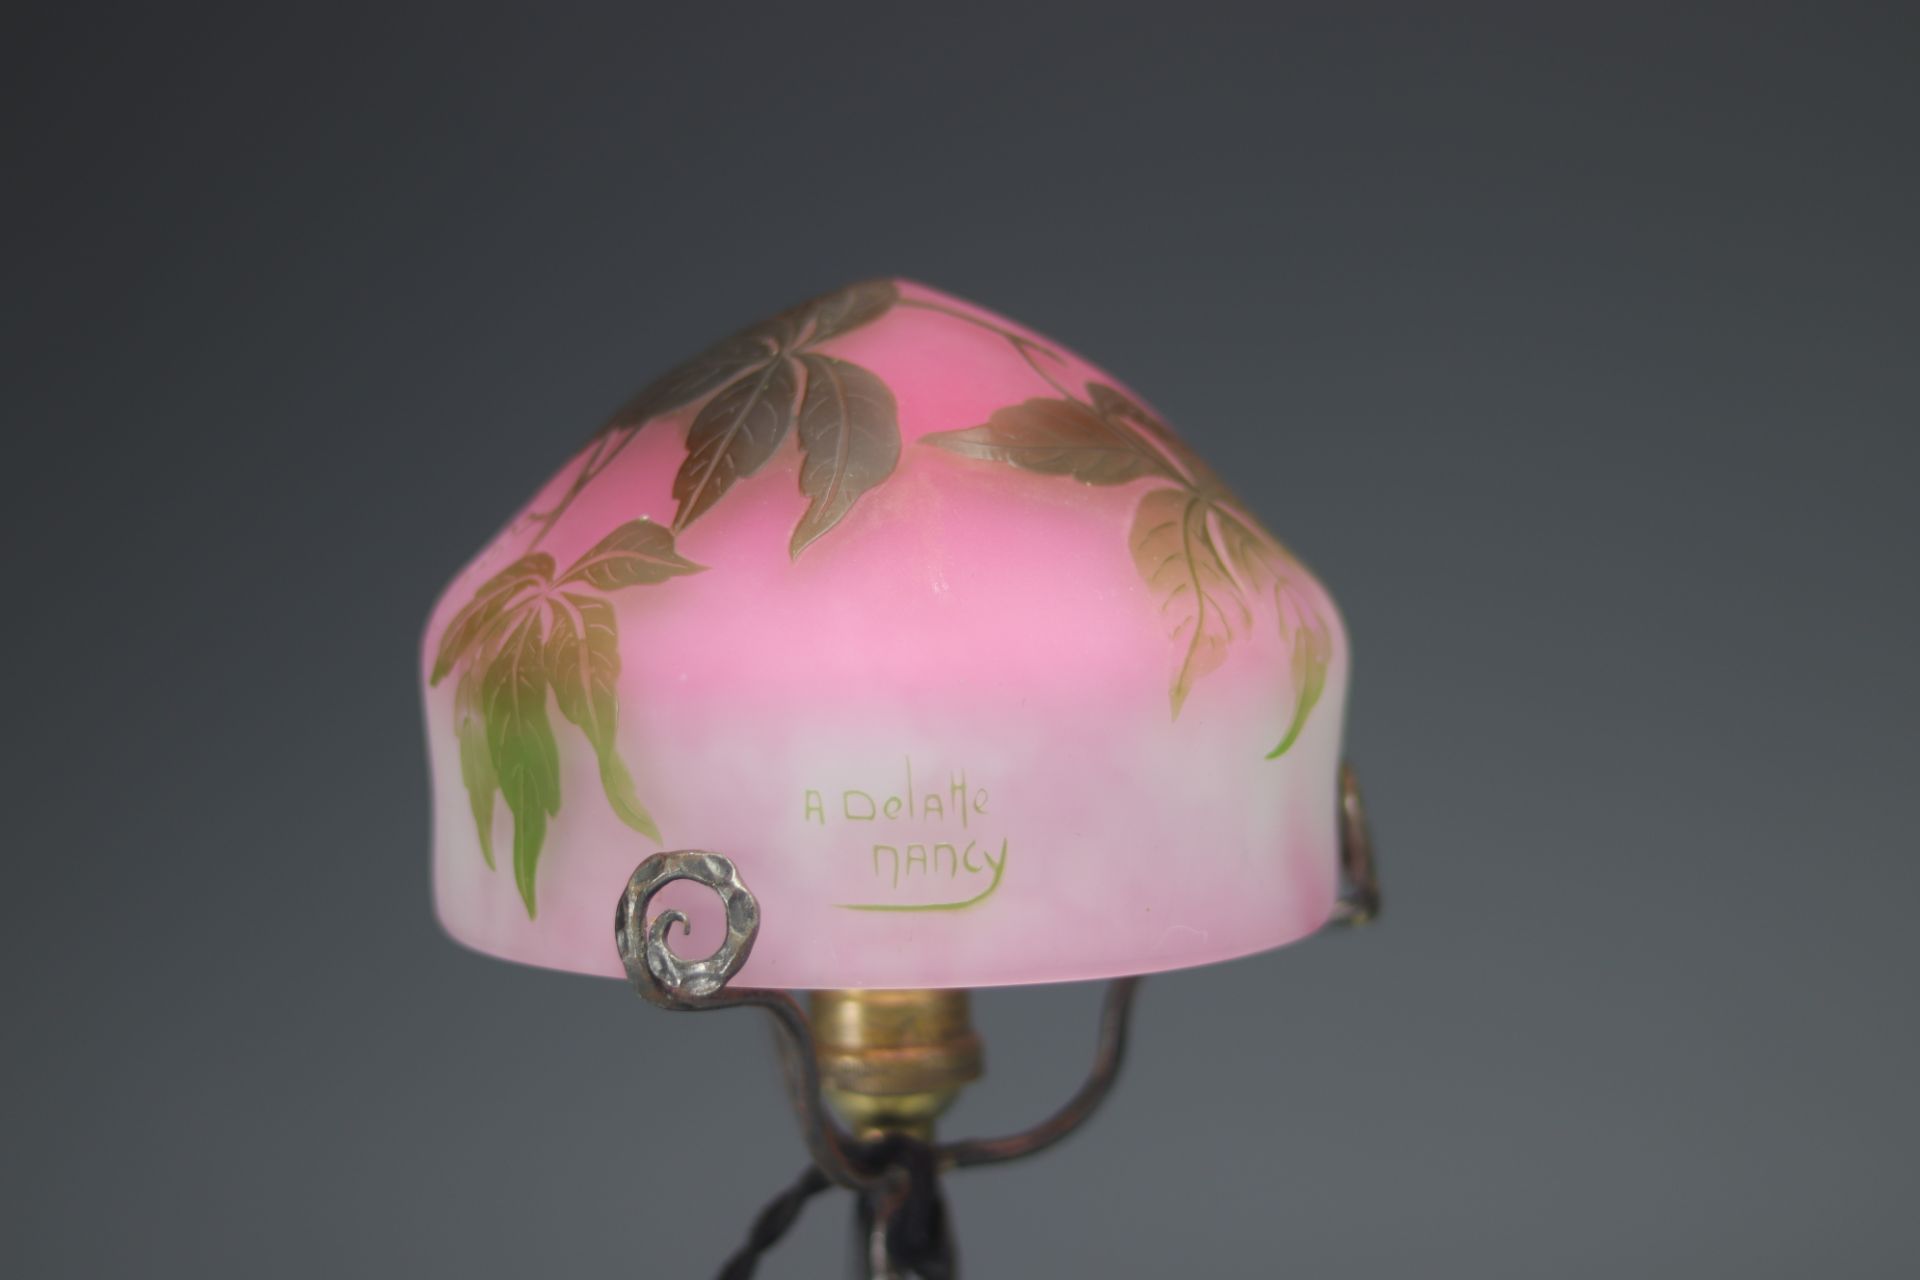 Delattre Nancy mushroom lamp with floral decoration - Image 5 of 5